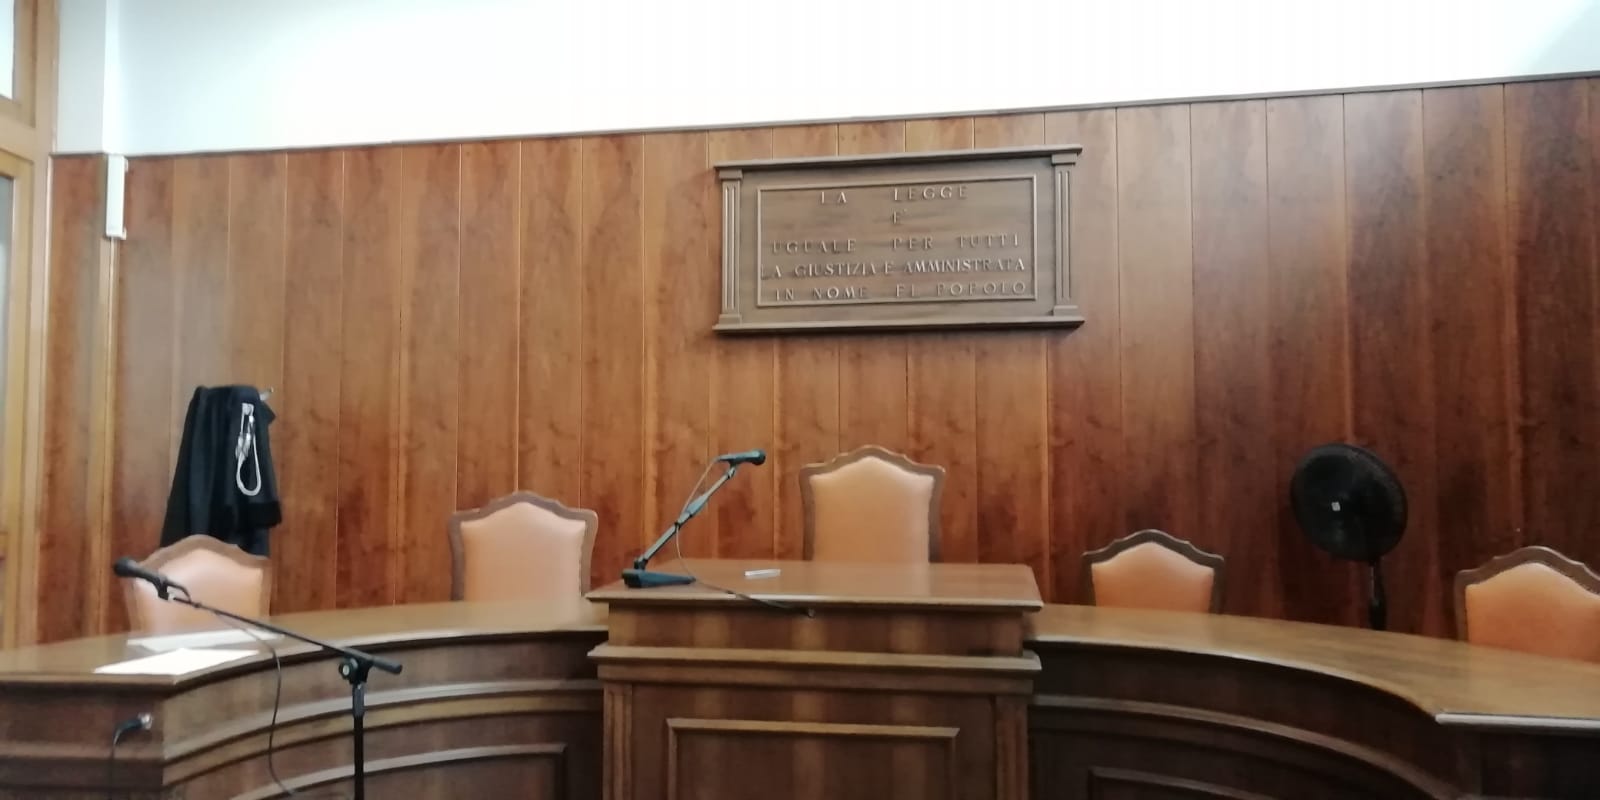 Arzachena, bimbo segregato: avvocati chiedono clemenza